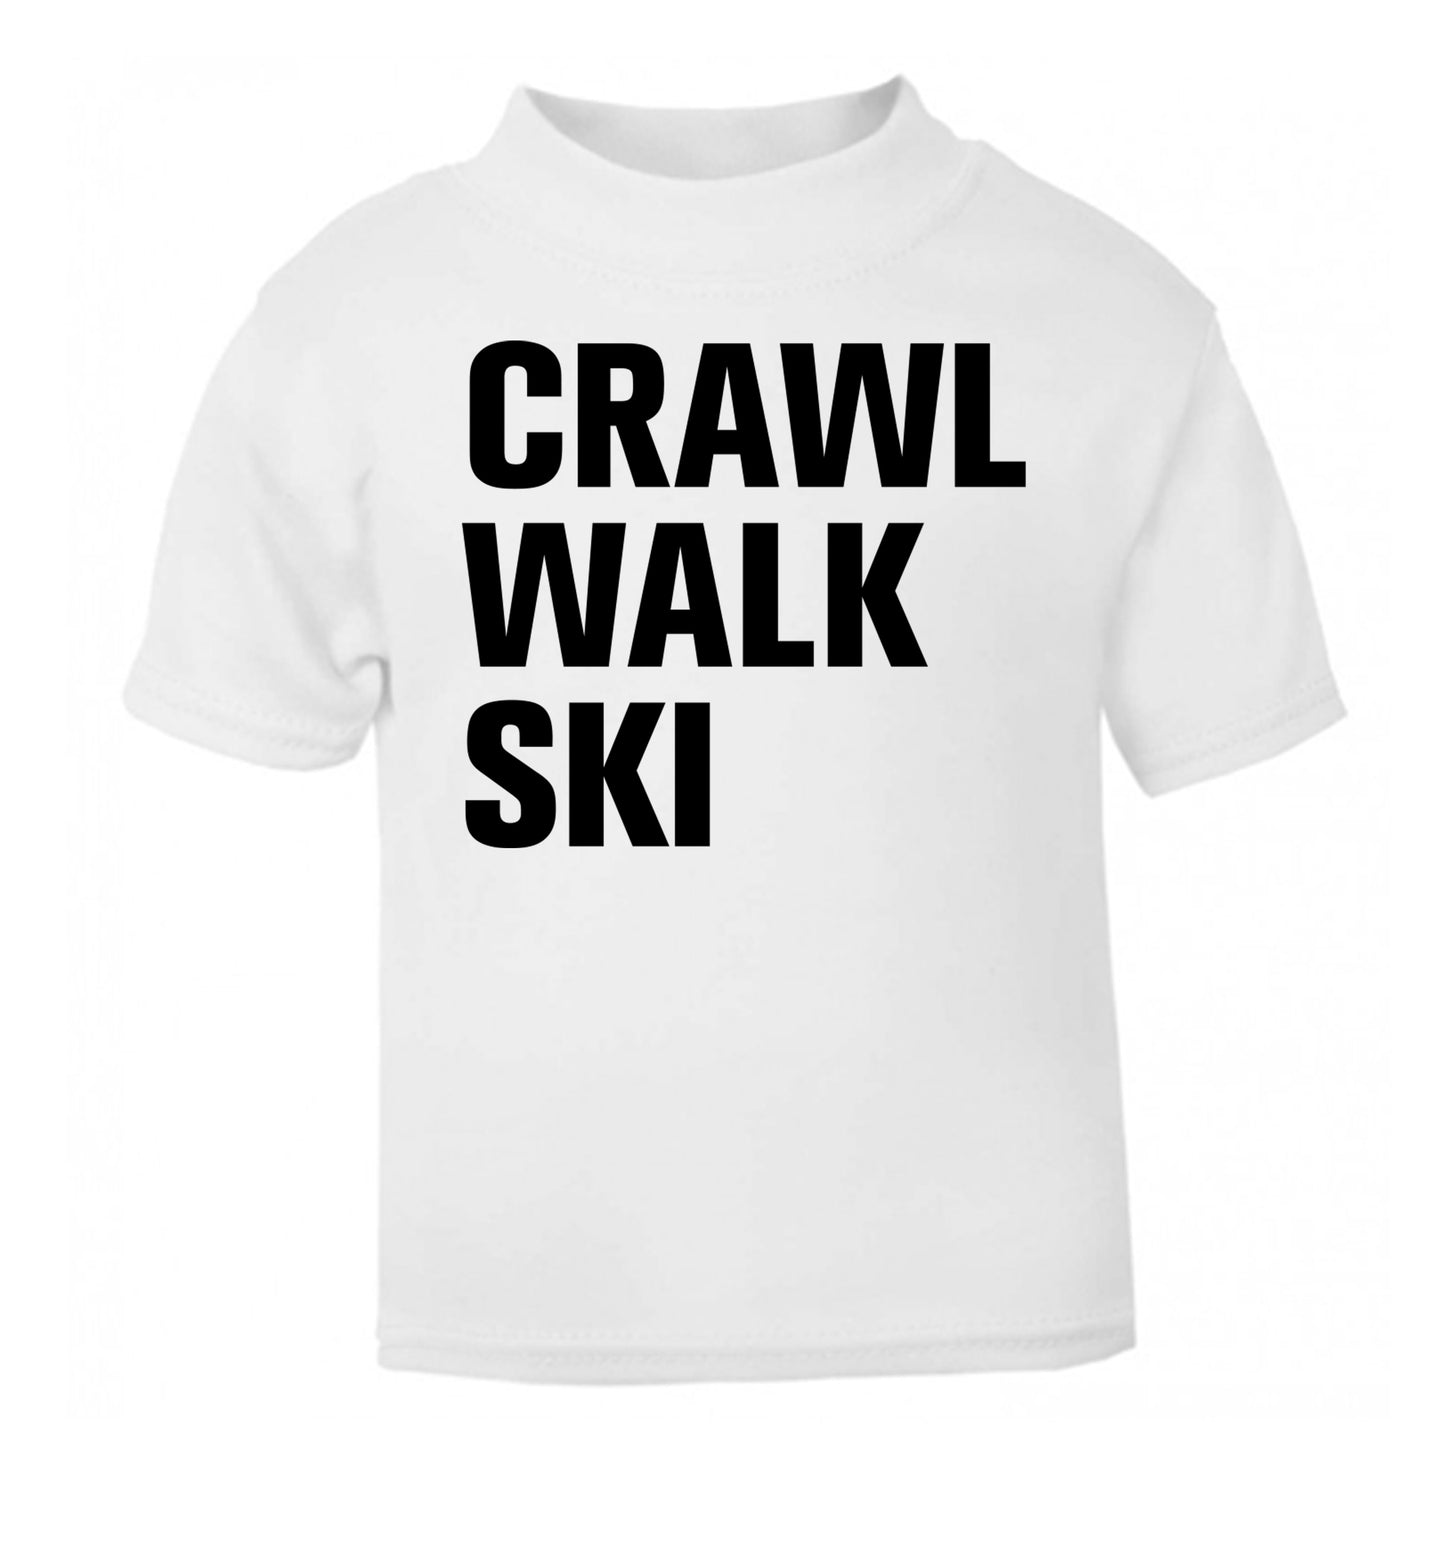 Crawl walk ski white Baby Toddler Tshirt 2 Years